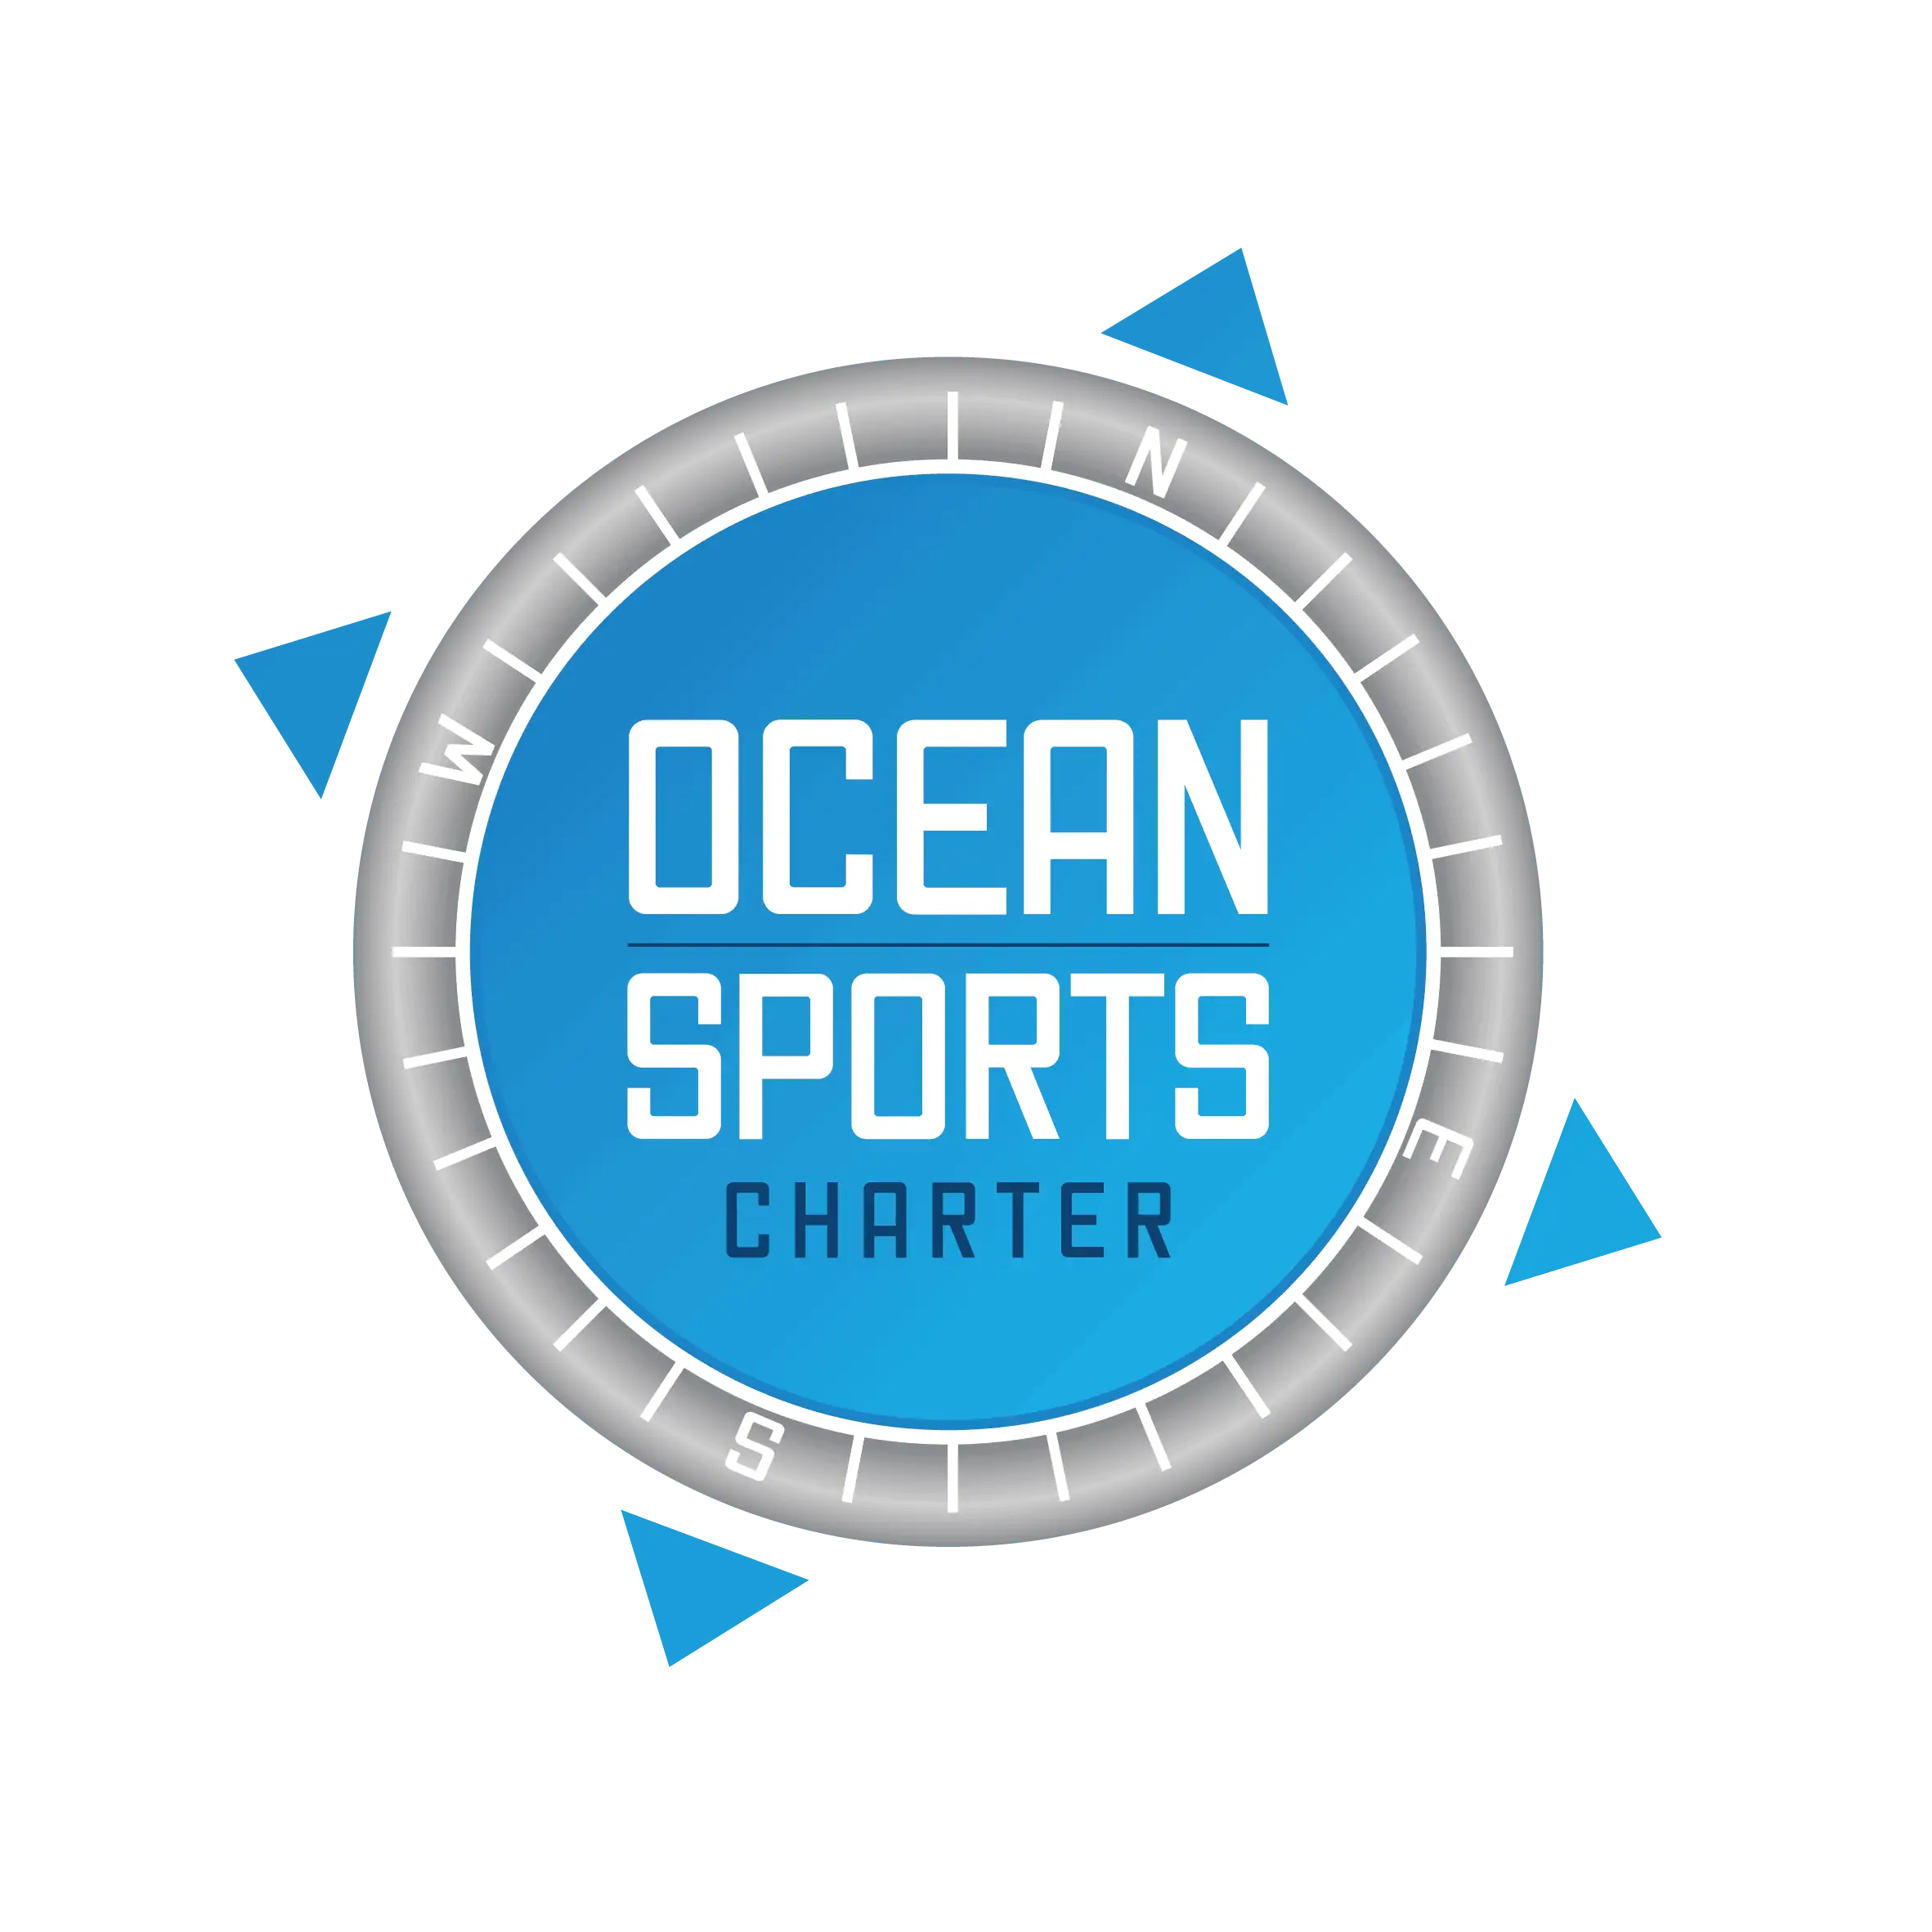 OCEAN-SPORTS-CHARTER-LOGO-01-1